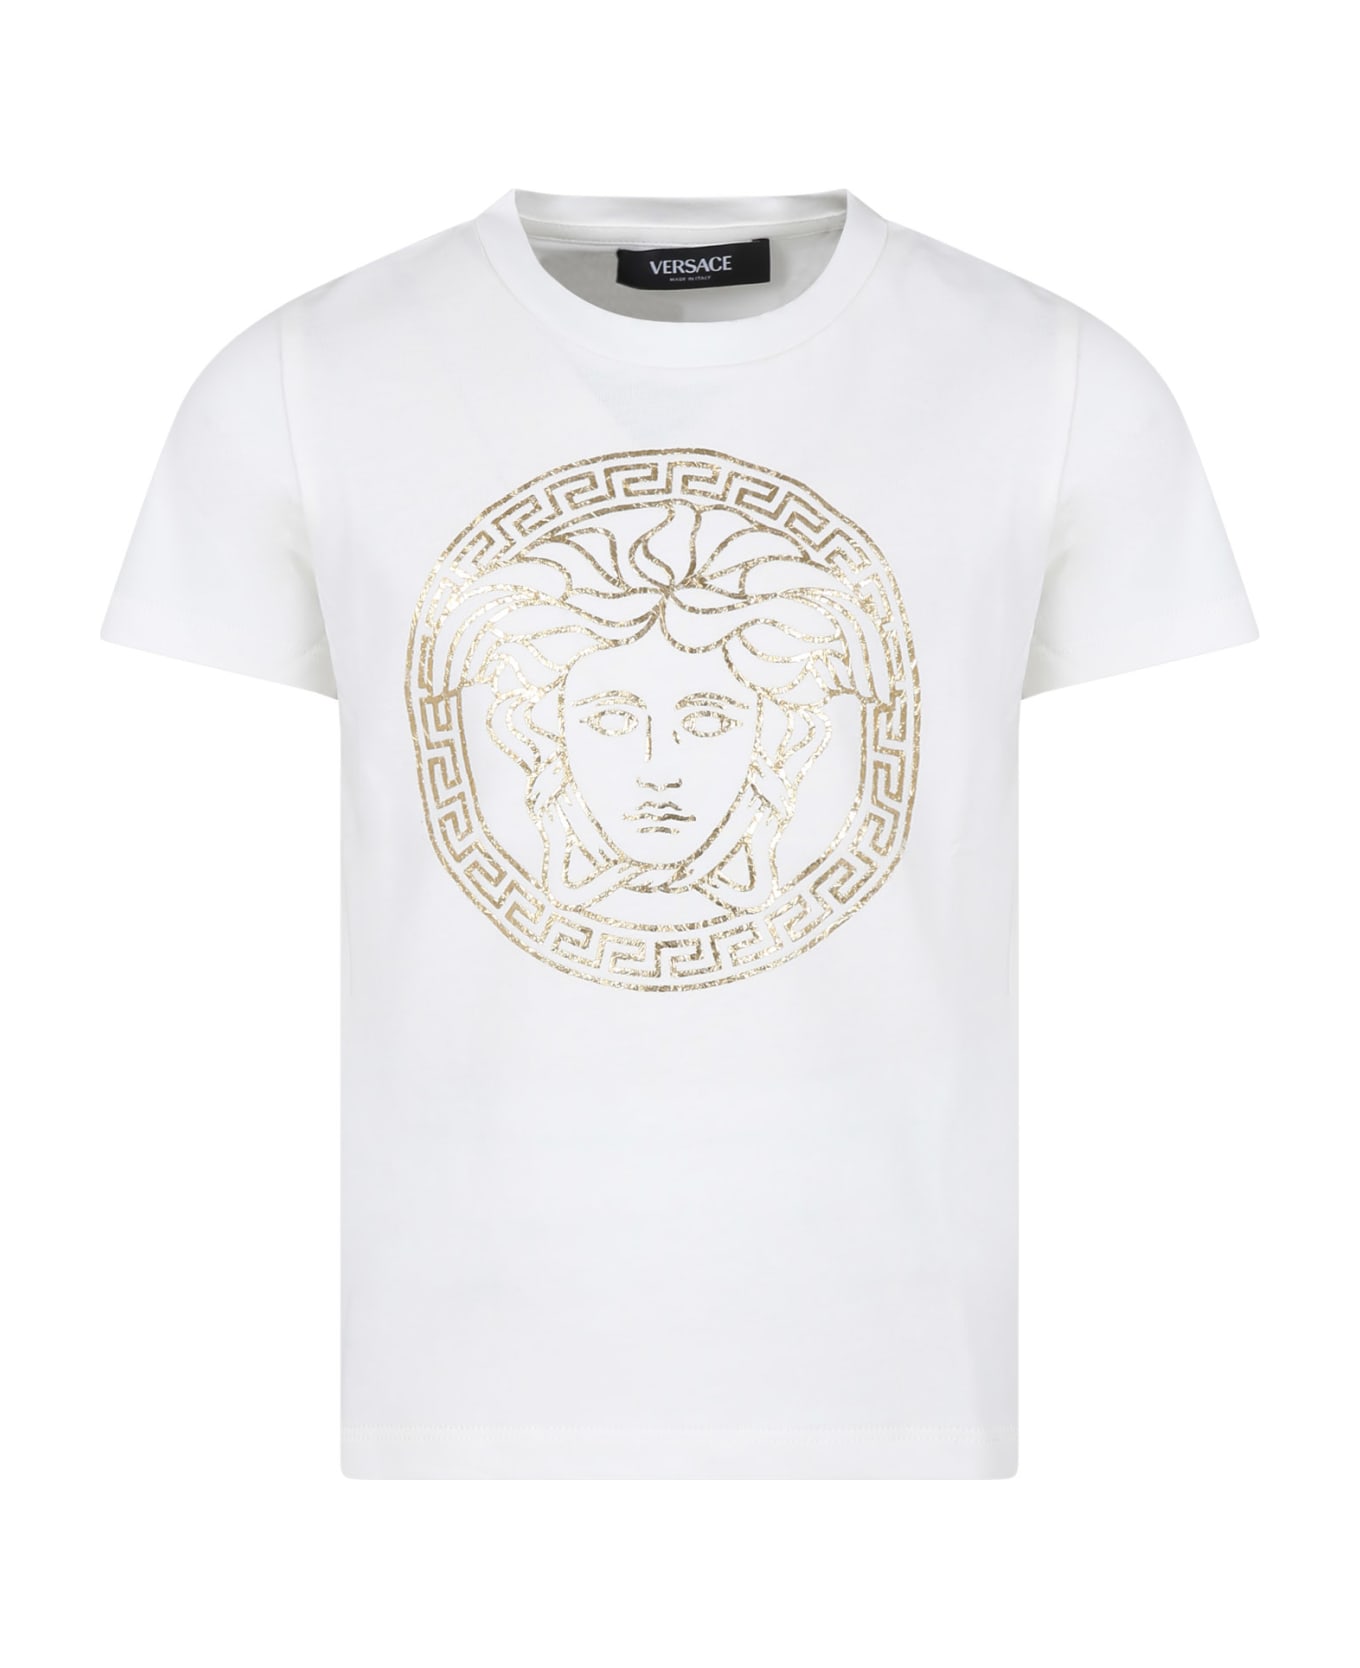 Versace White T-shirt For Kids With Medusa - White